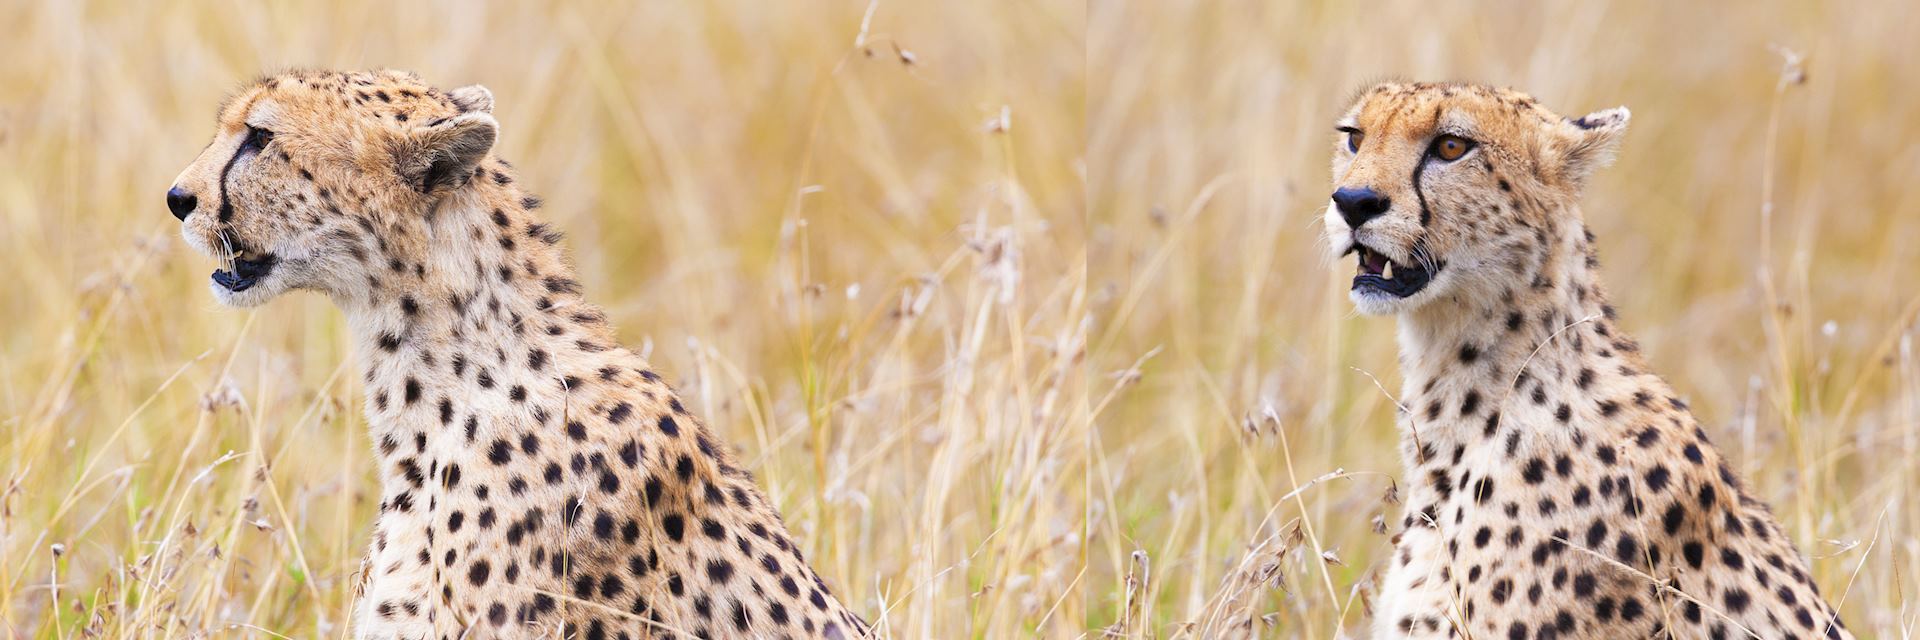 Cheetah in Shaba National Reserve